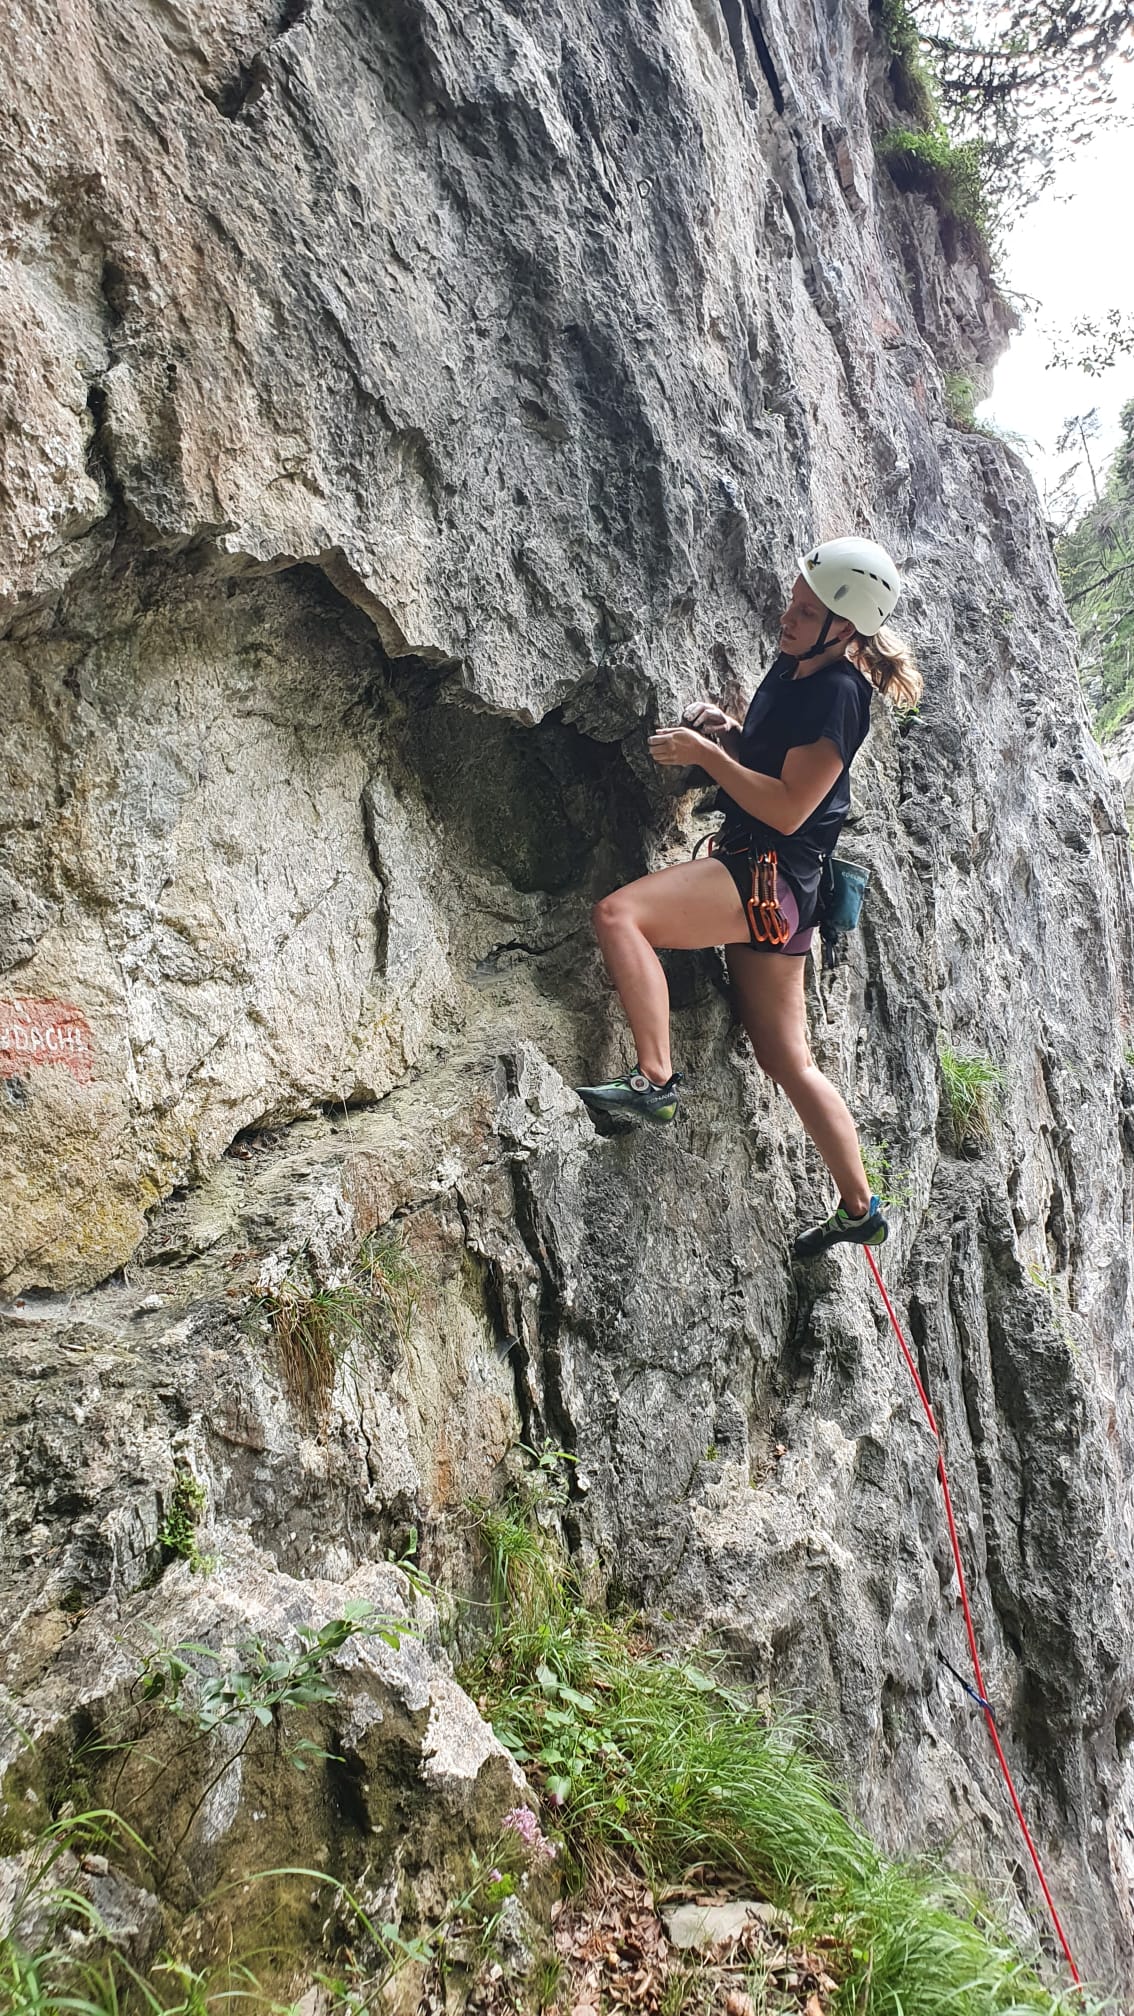  Hanna rock climbing